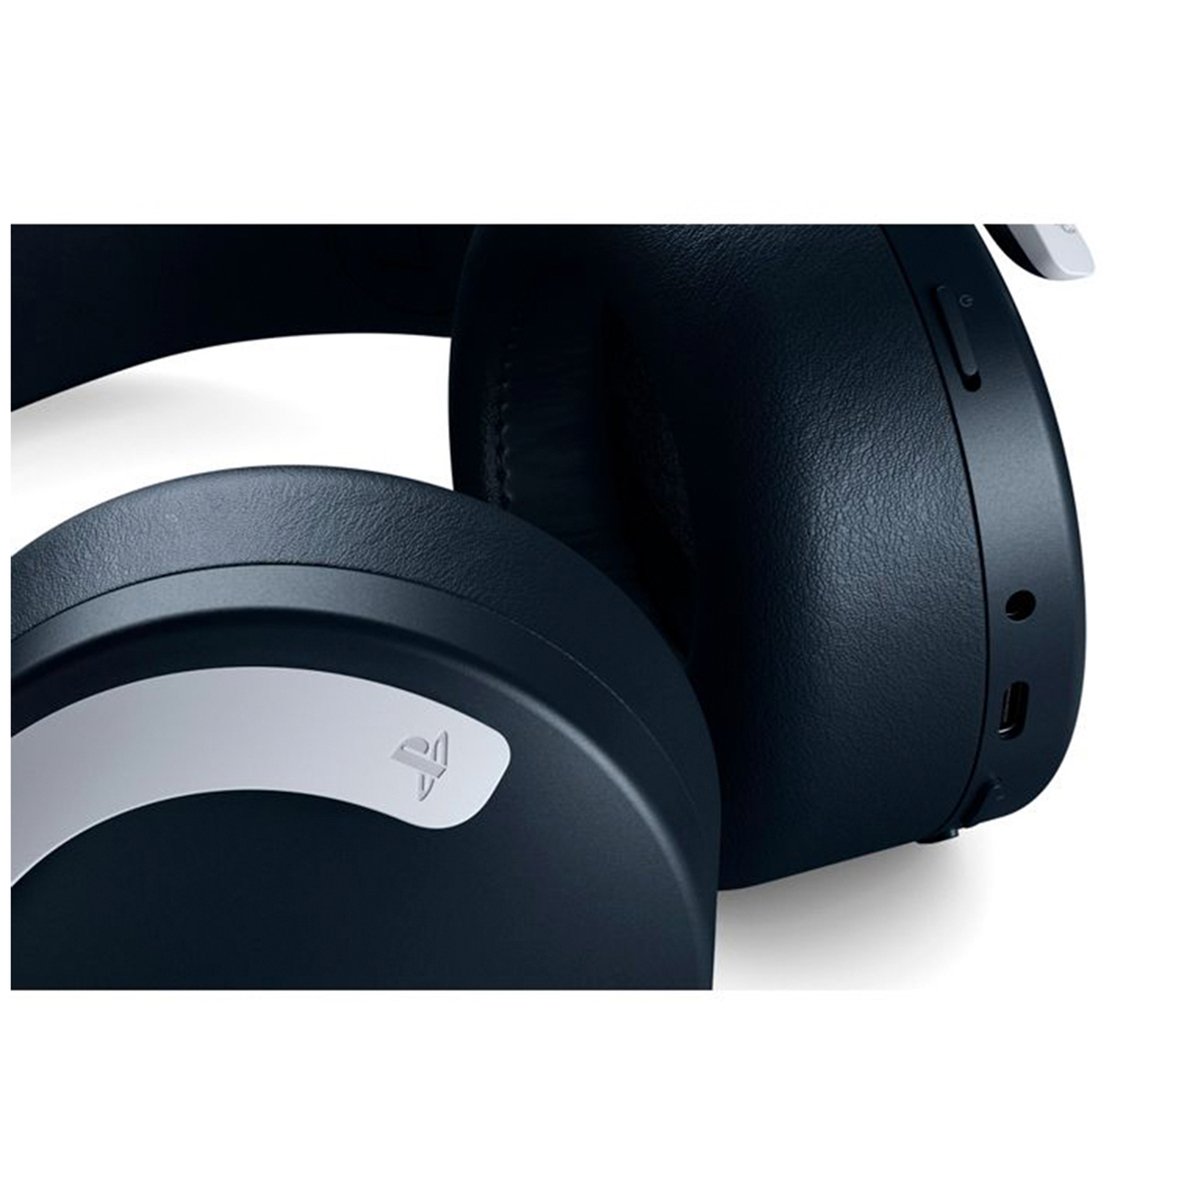 Sony PlayStation®5 - Pulse 3D Wireless Headset 